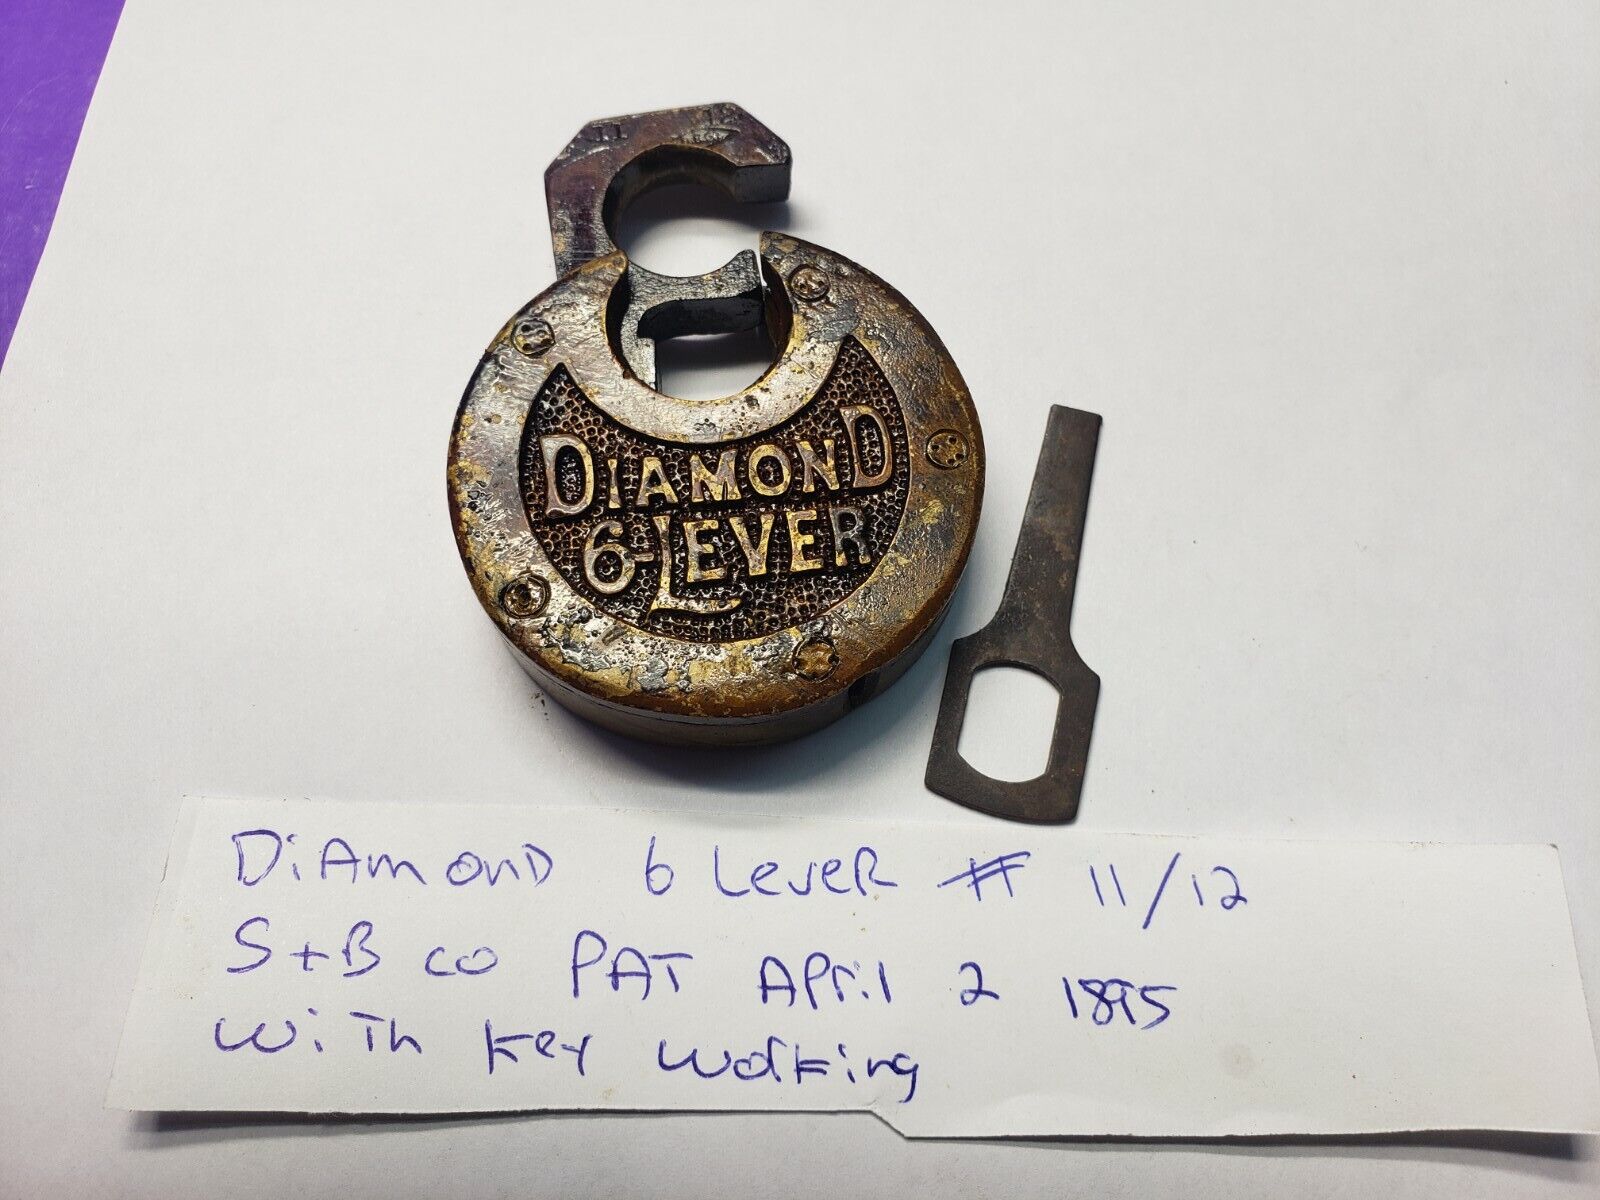 Antique  BRASS  DIAMOND  6-LEVER PADLOCK #11/12 S&B CO Pat Apl. 2 1895 KEY WORKS